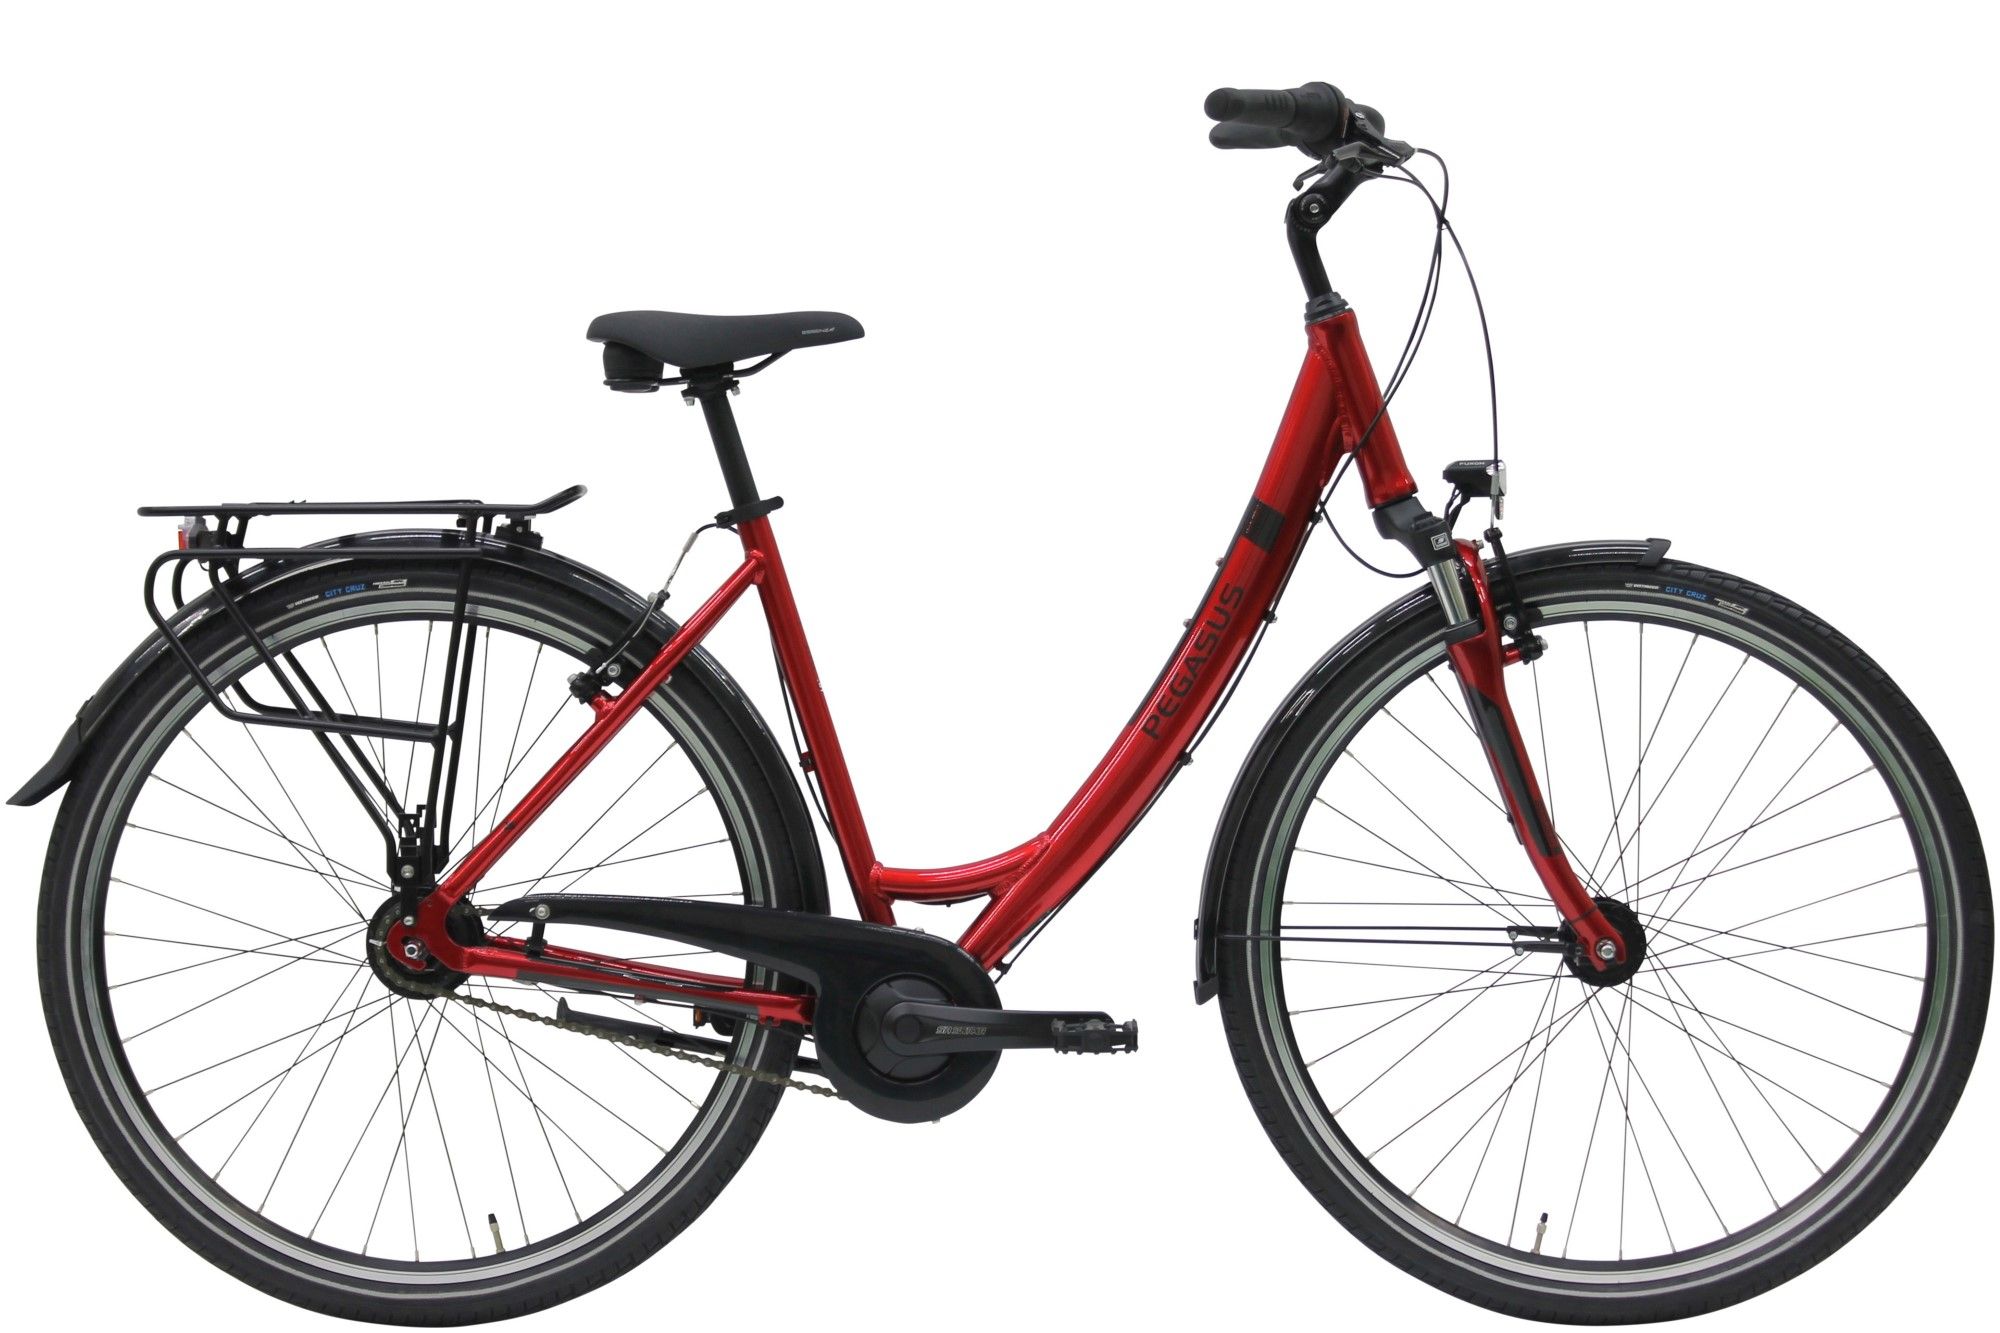 Pegasus Solero SL 7 Damen rot (2021) - Fahrrad Online Shop